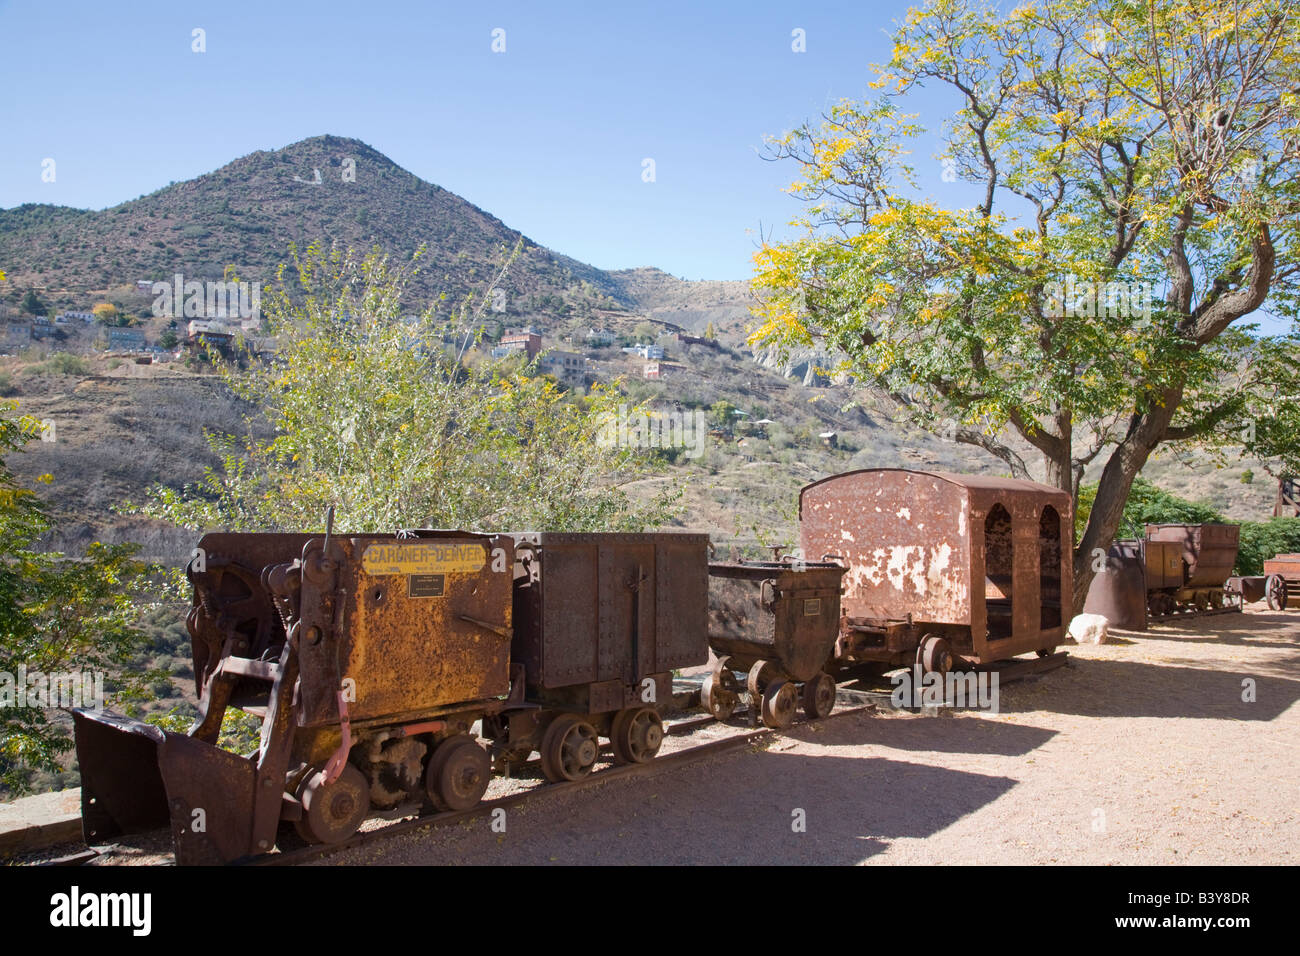 AZ, Arizona, Jerome, Jerome State Historic Park, devoted to the mining history of the area, old mining cars Stock Photo